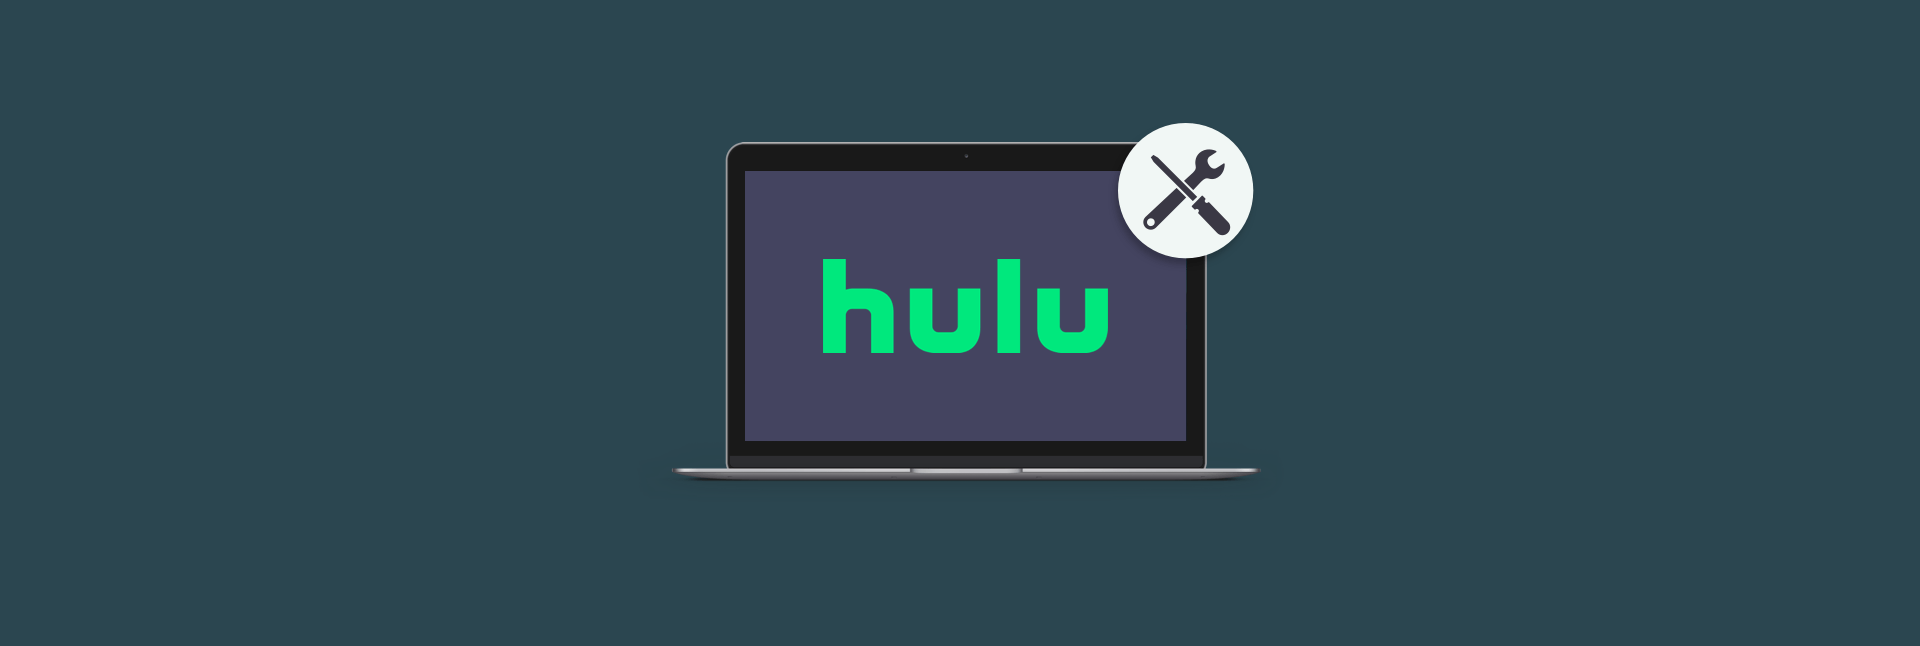 Hulu on LG Smart TV - How to fix Hulu